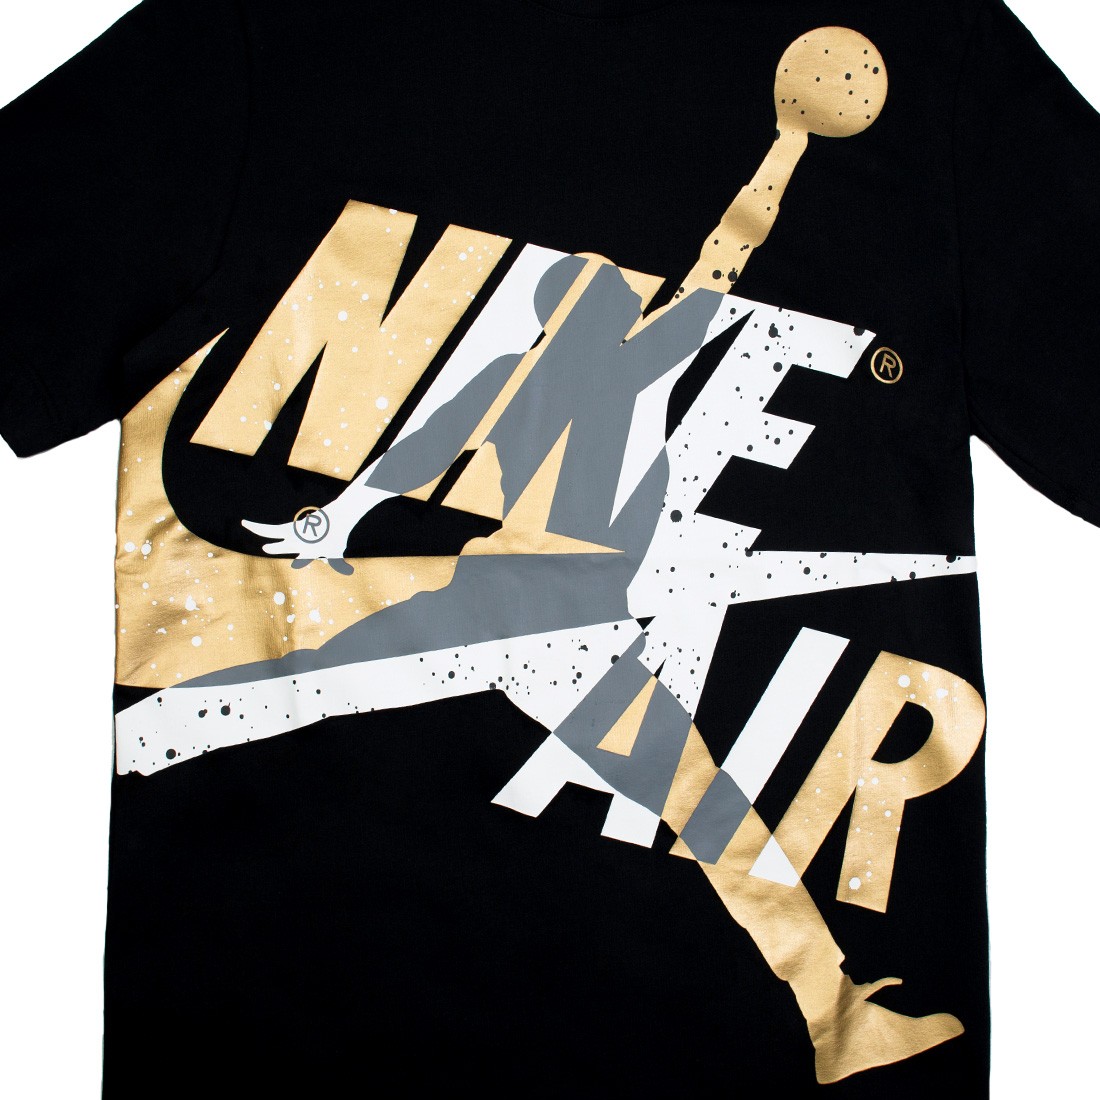 Nike Air Jordan Jumpman Black/Gold Men's Classic T Shirt Size XL